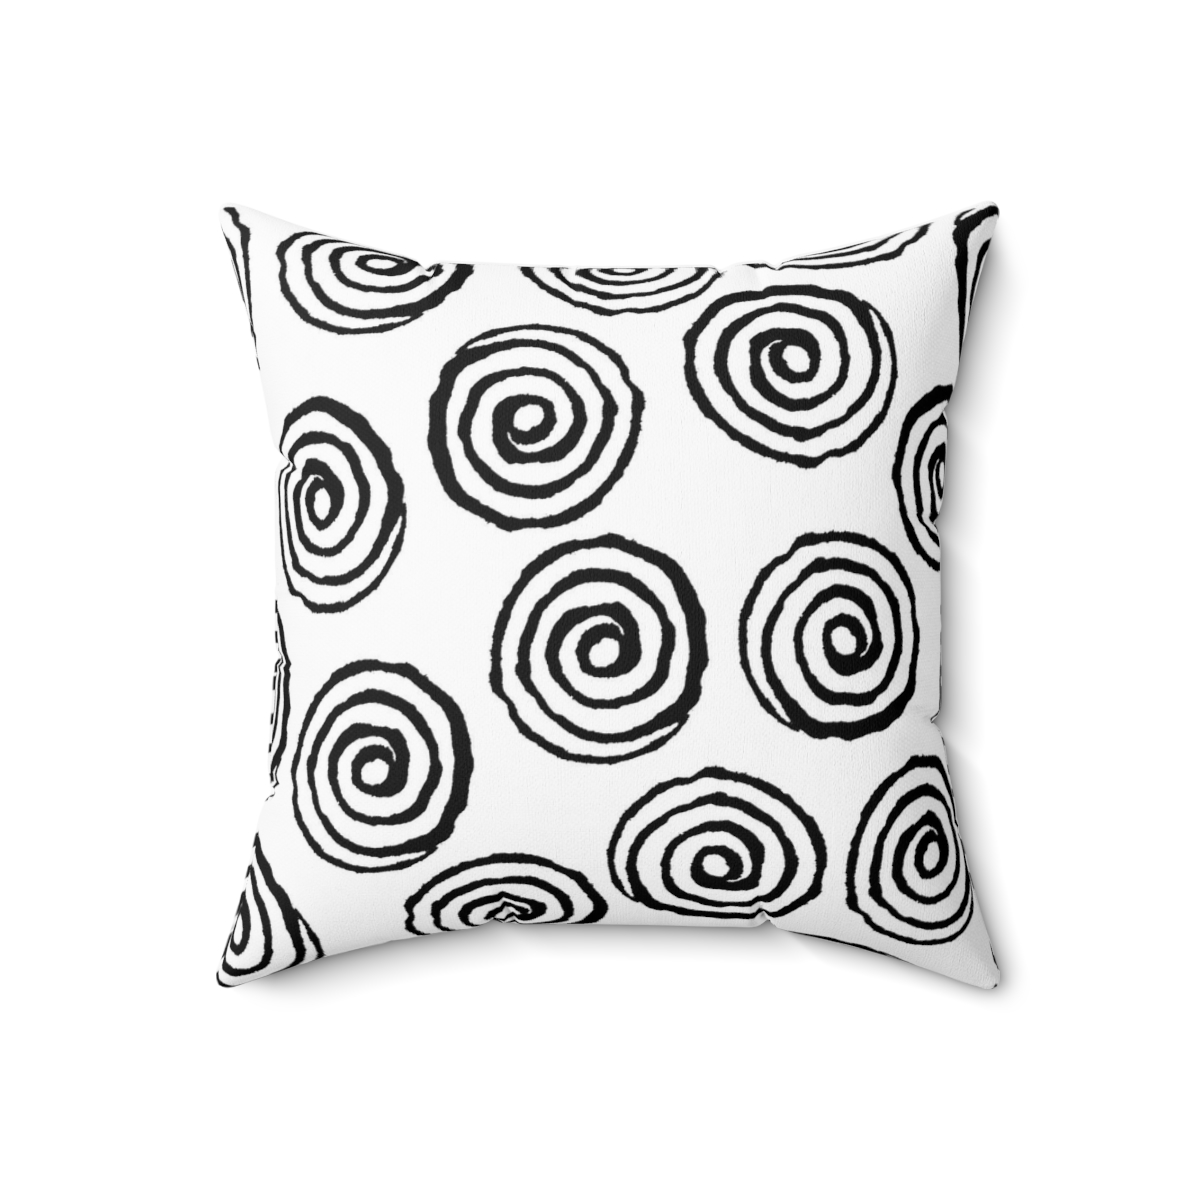 Square Pillows Black Spiral product thumbnail image